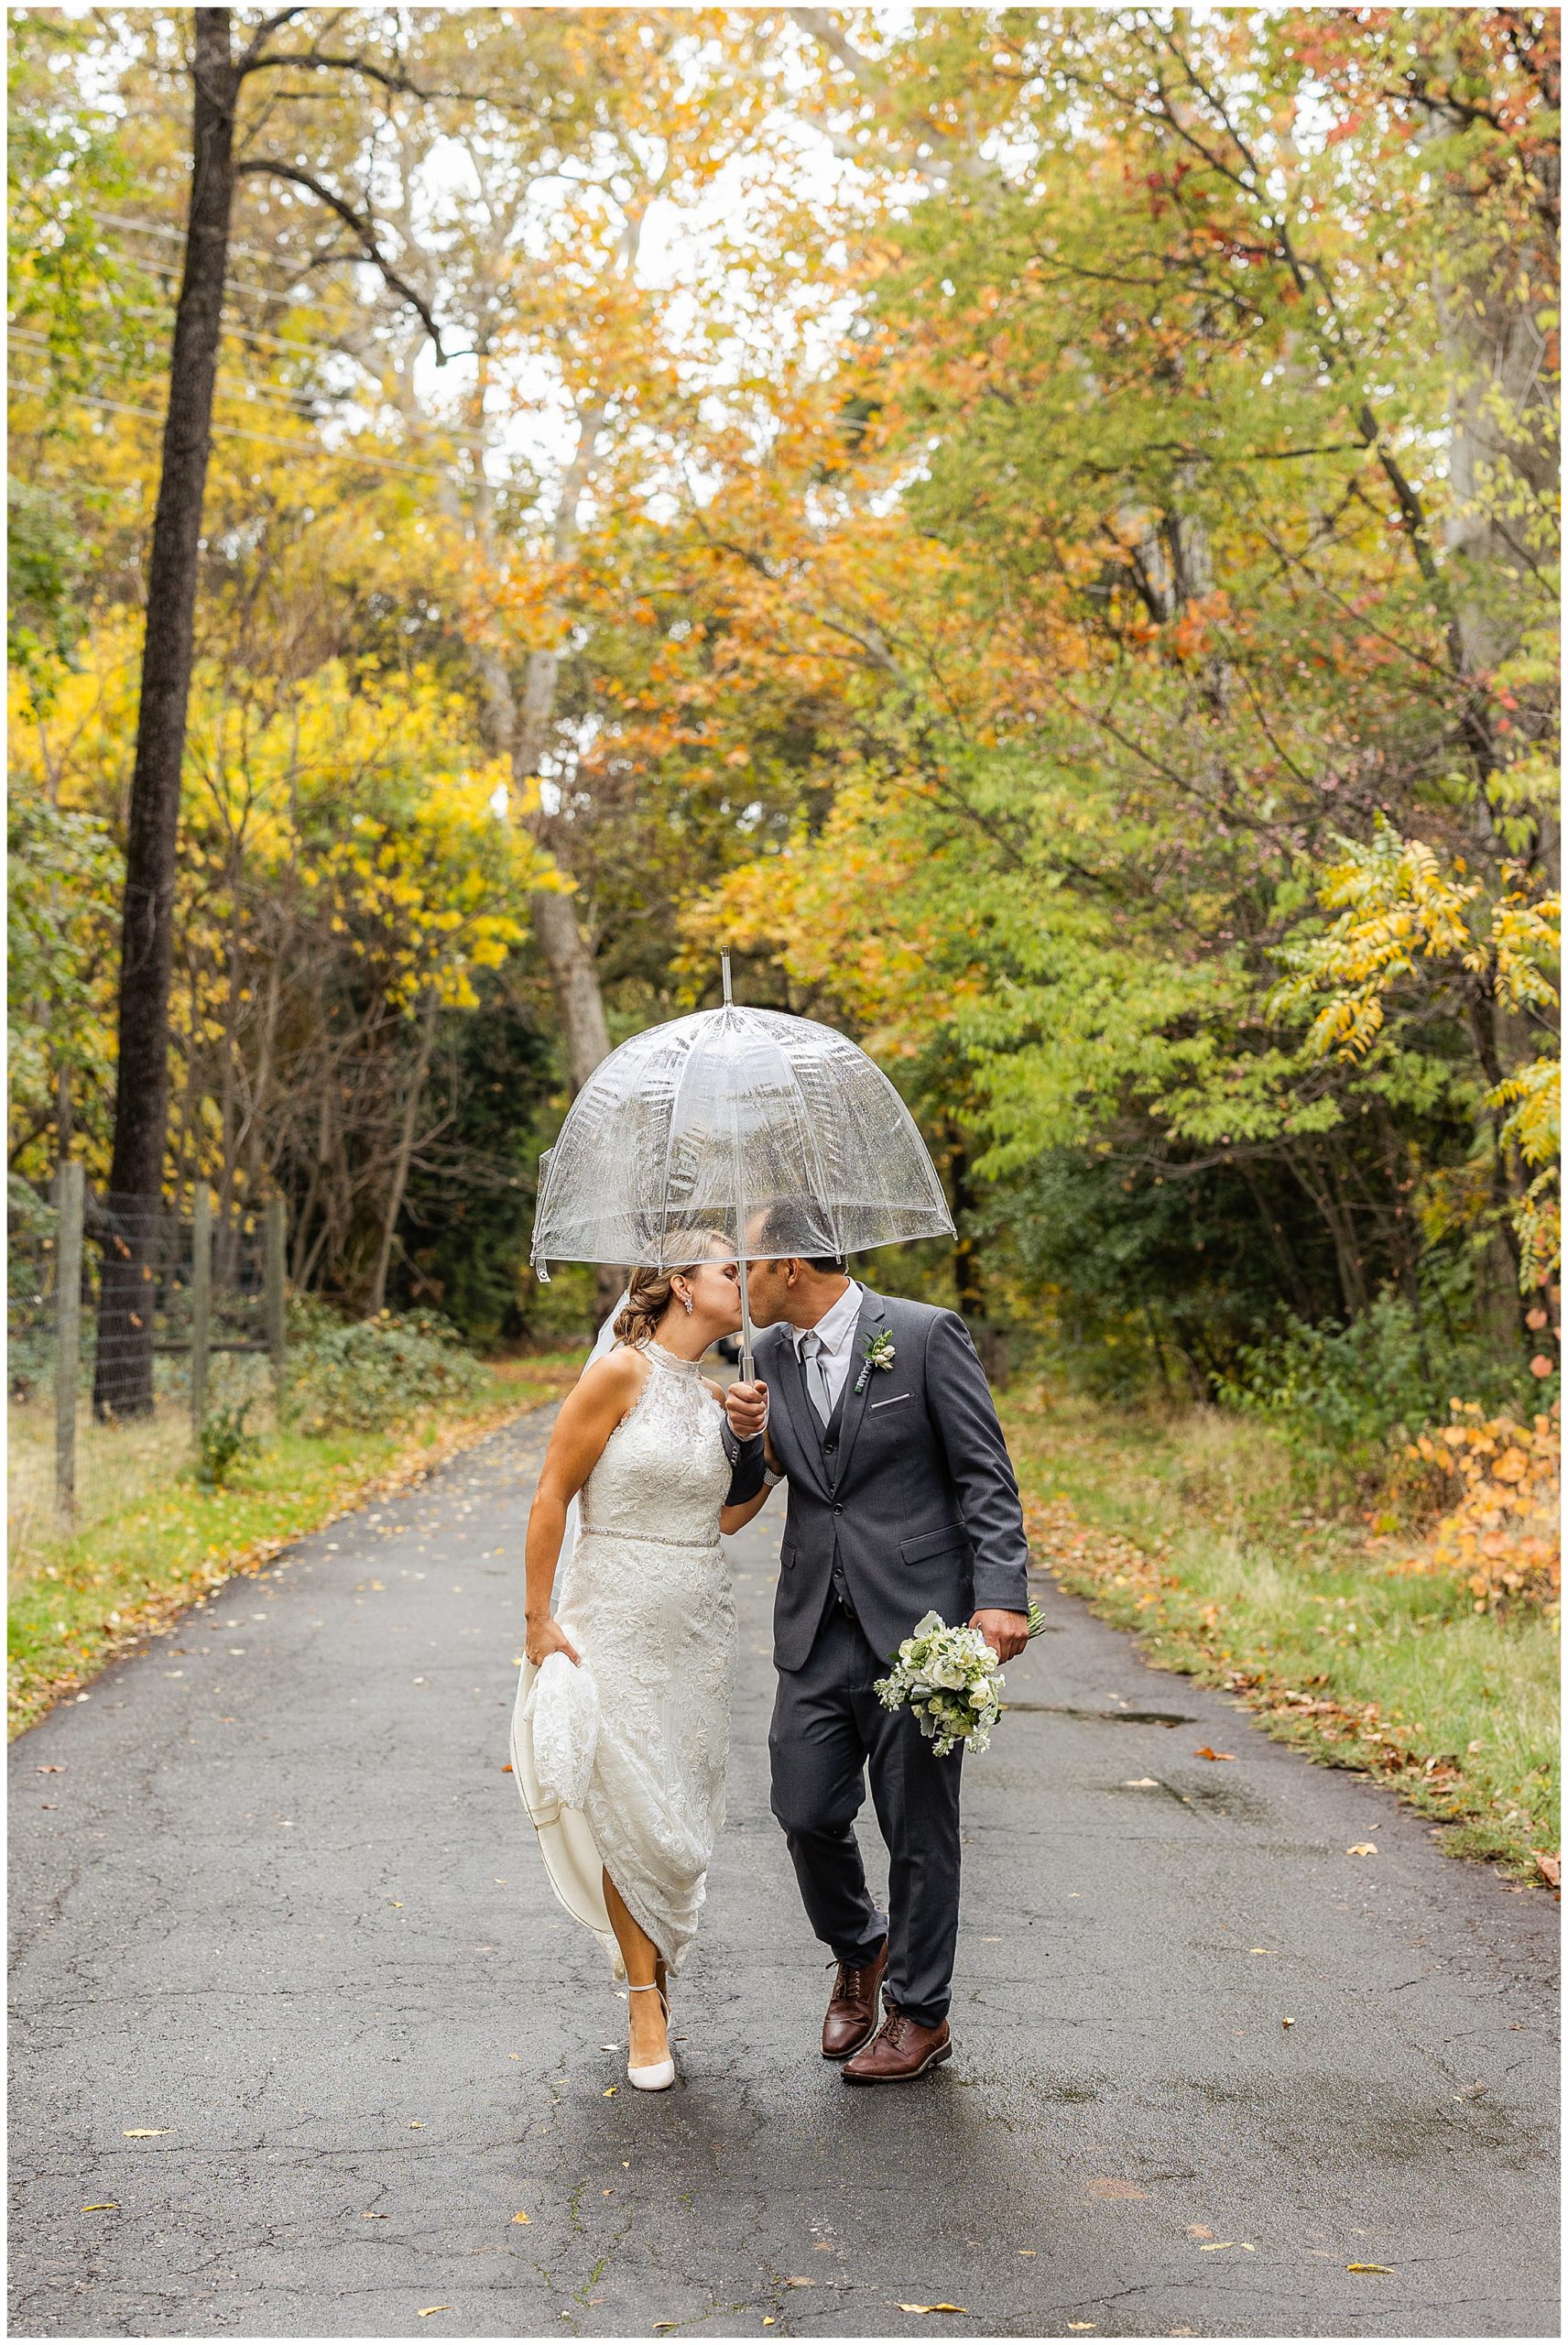 Rainy Wedding Day with Umbrella in Bidwell Park | Glenna + Jordan